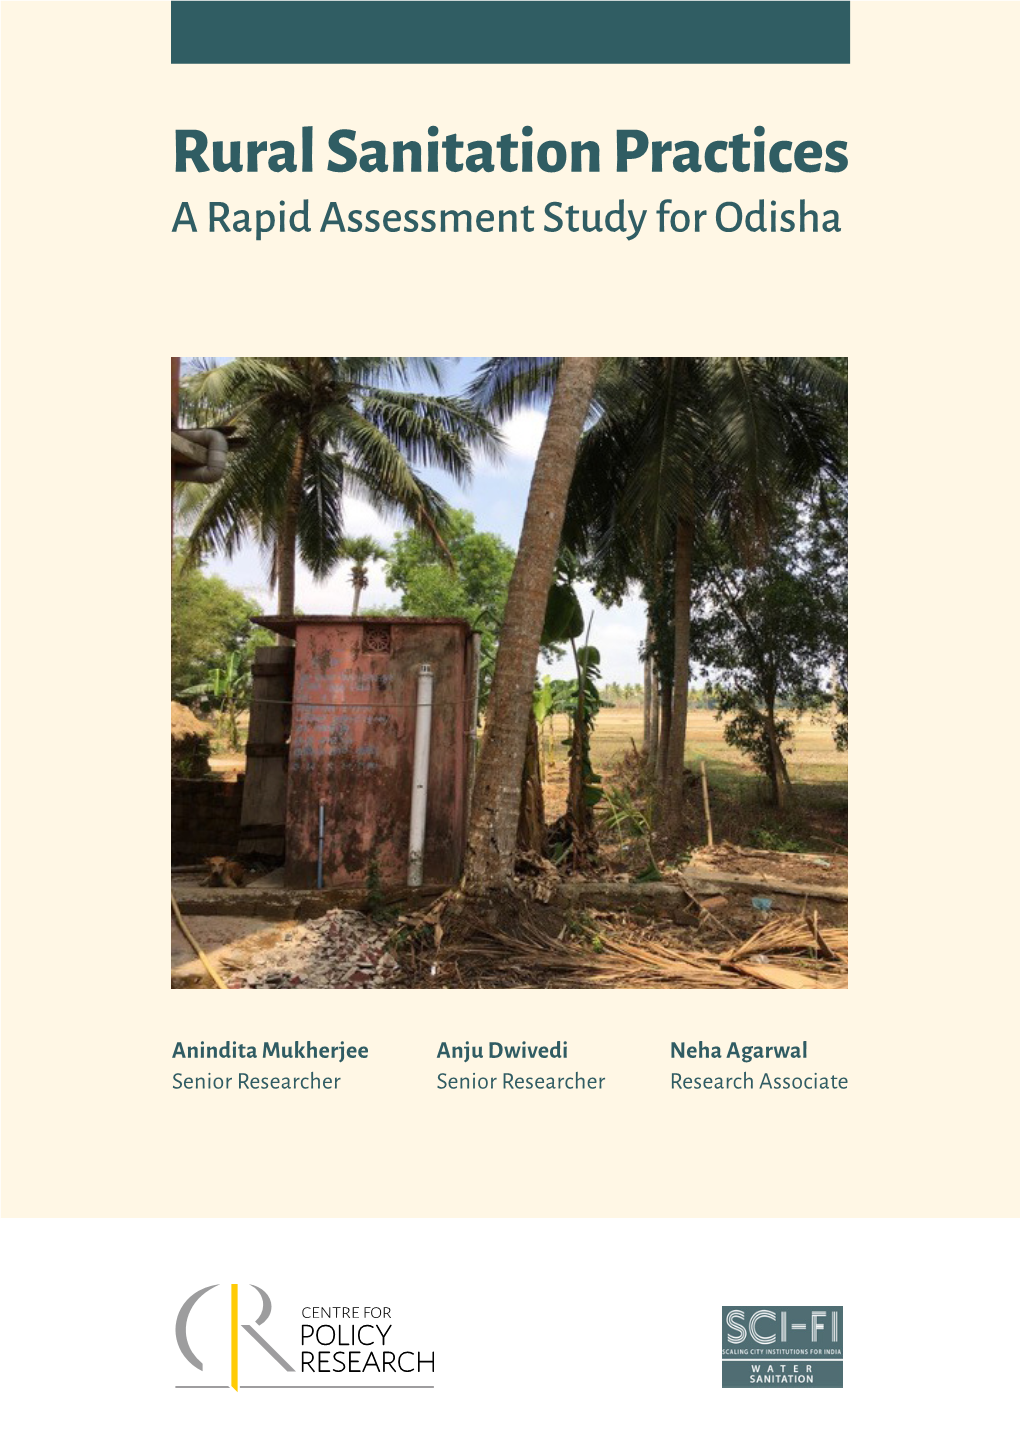 Rural Sanitation Practices a Rapid Assessment Study for Odisha